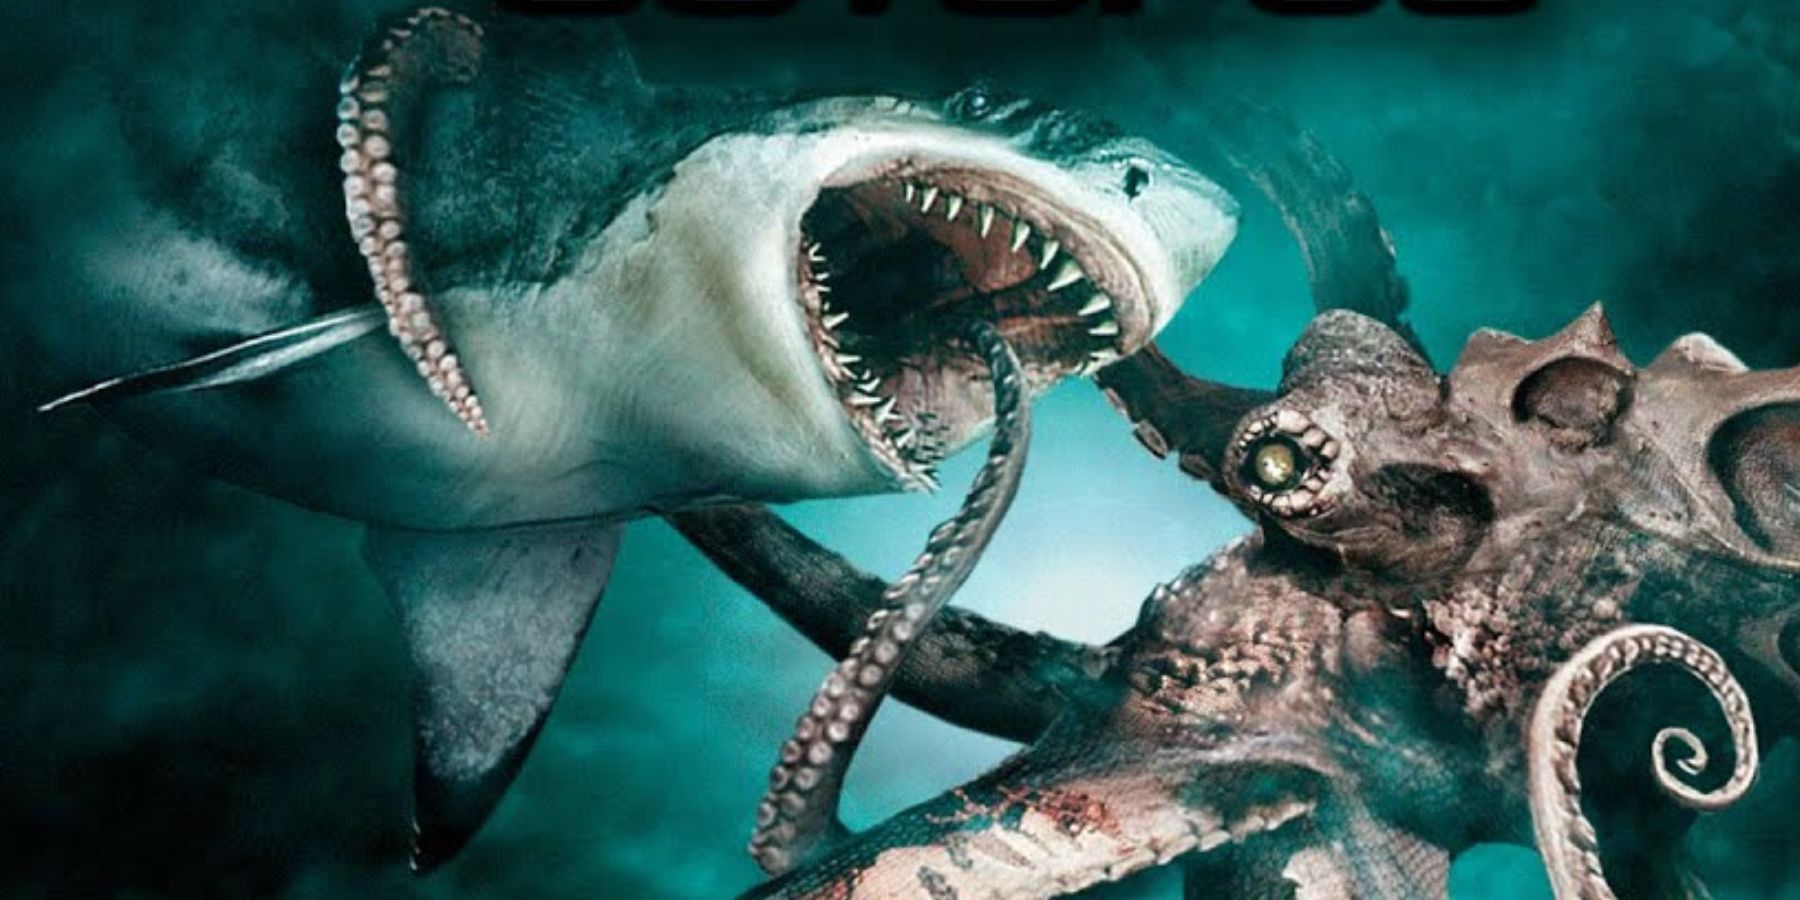 Mega Shark Versus Giant Octopus